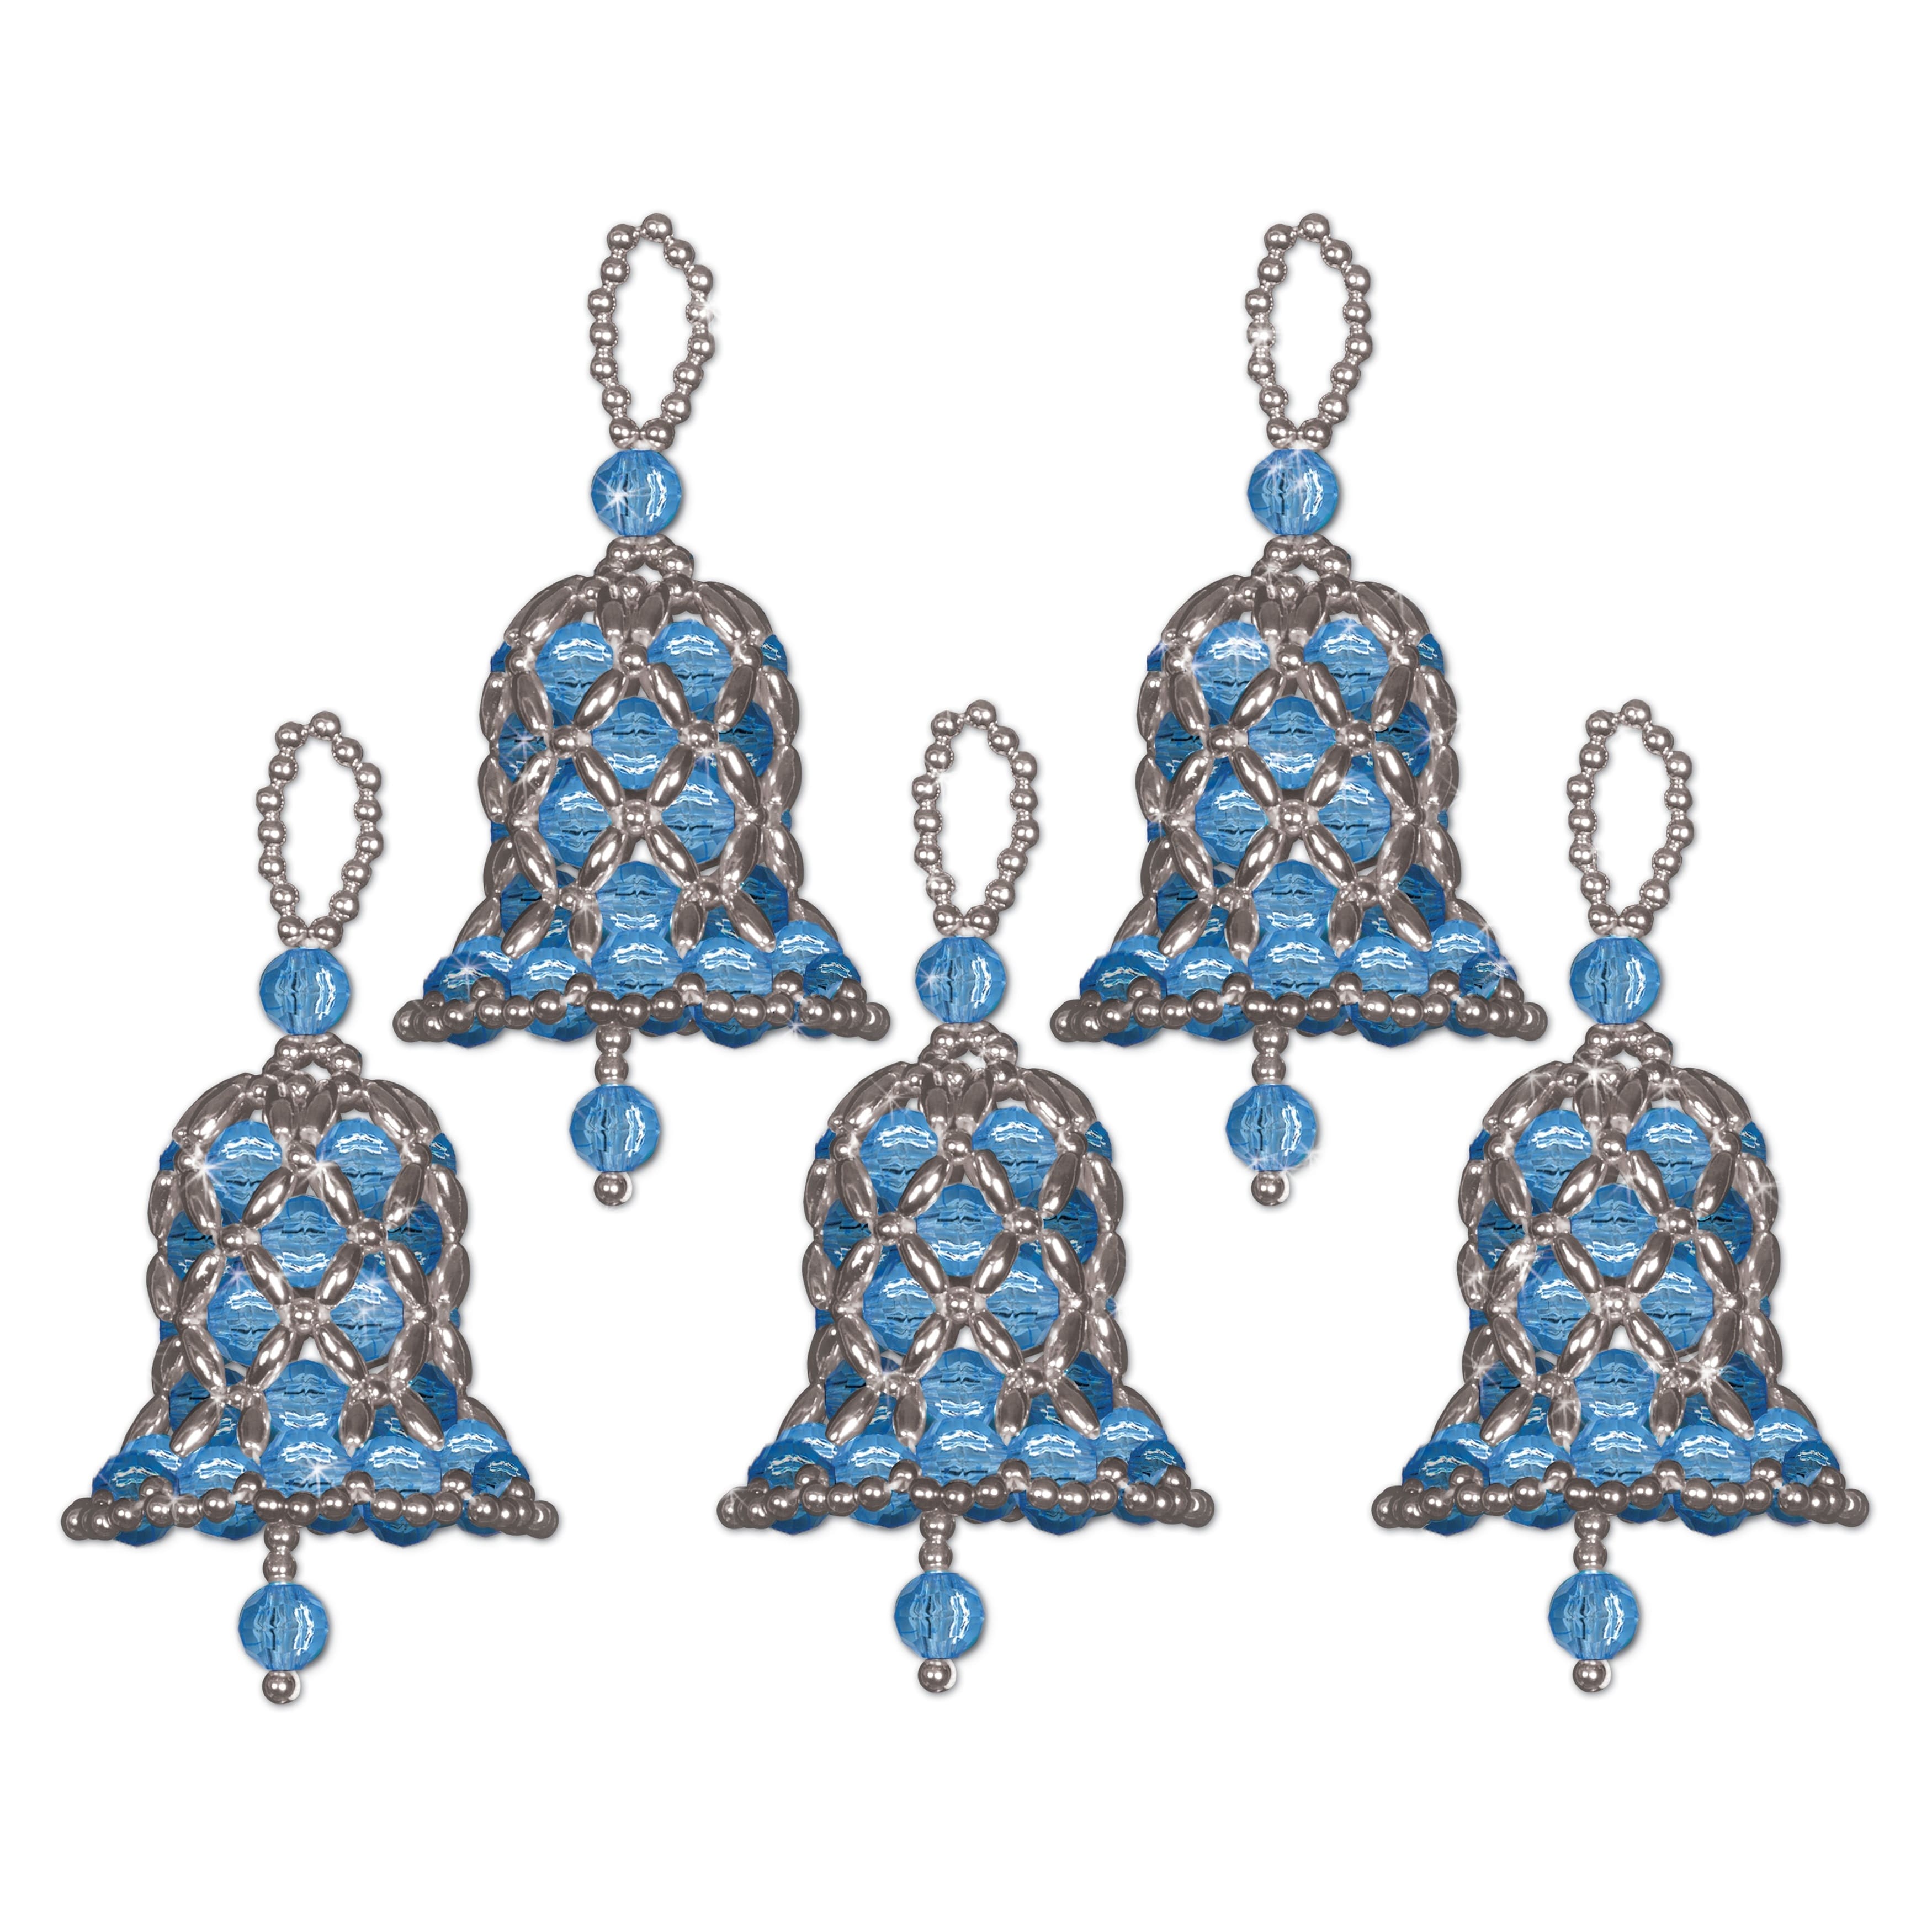 Design Works&#x2122; Blue Bells Beaded Ornament Kit